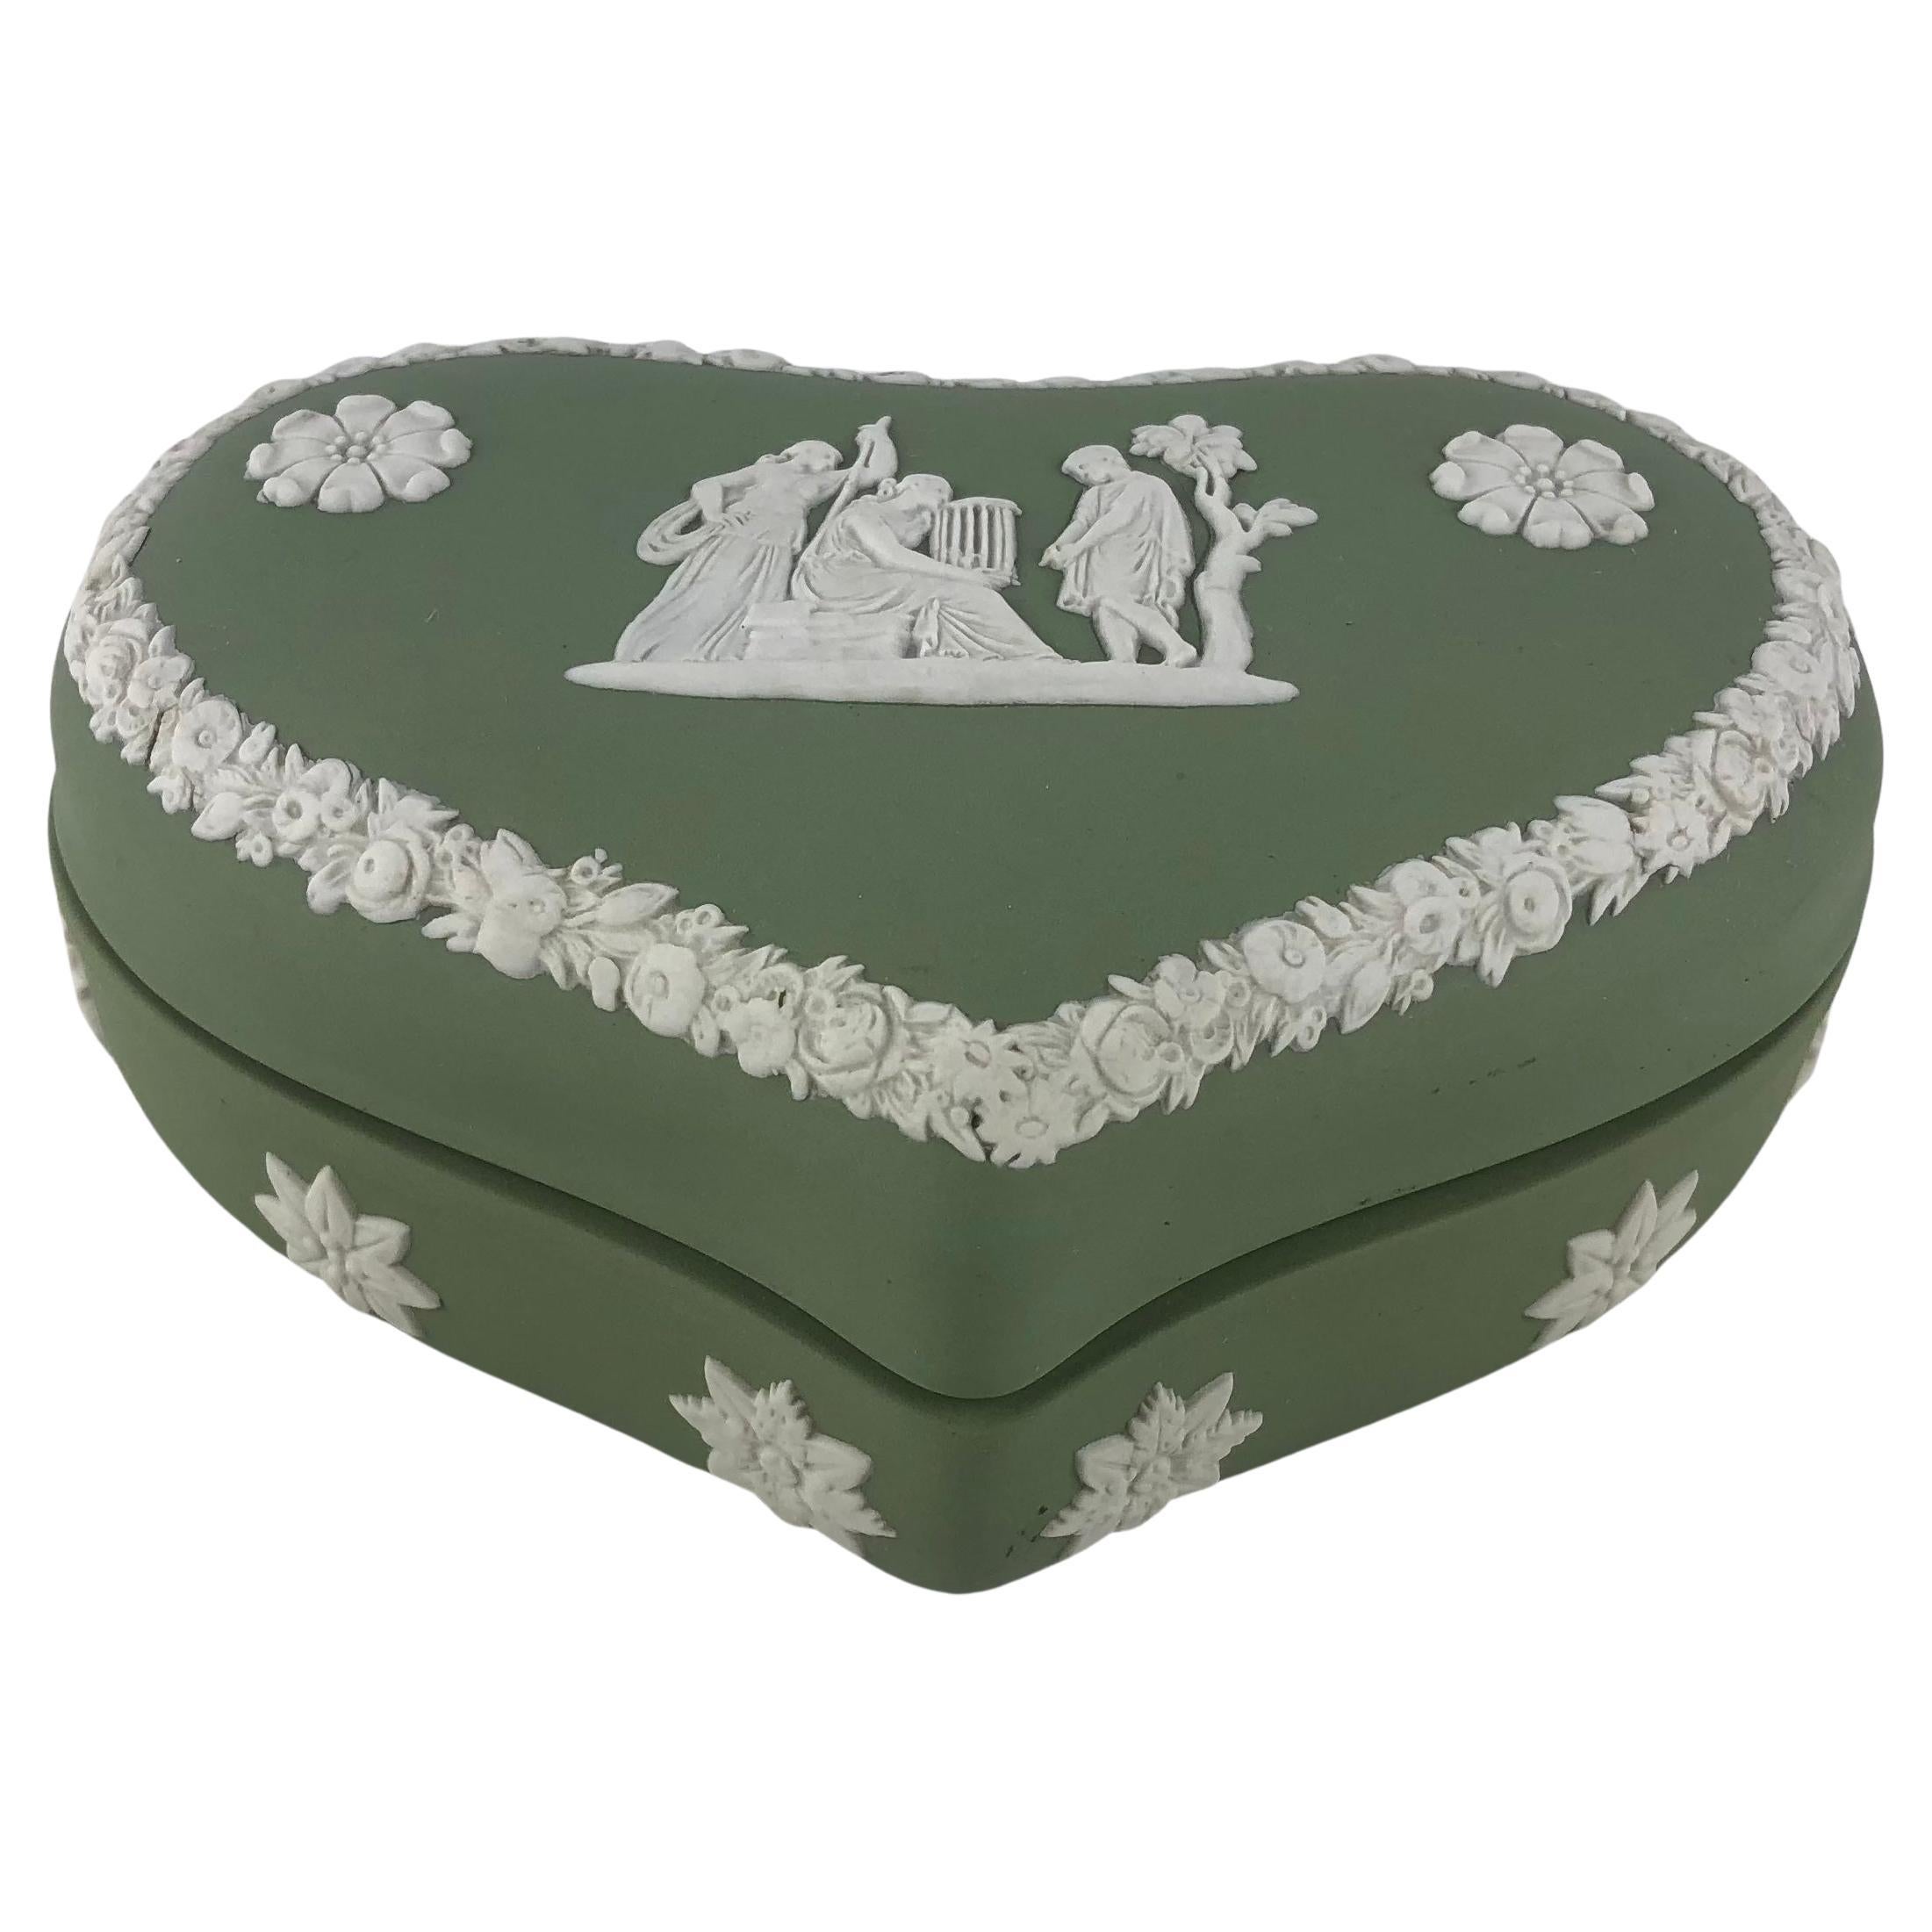 Antique English Jasperware Pale Green Jewelry or Trinket Box